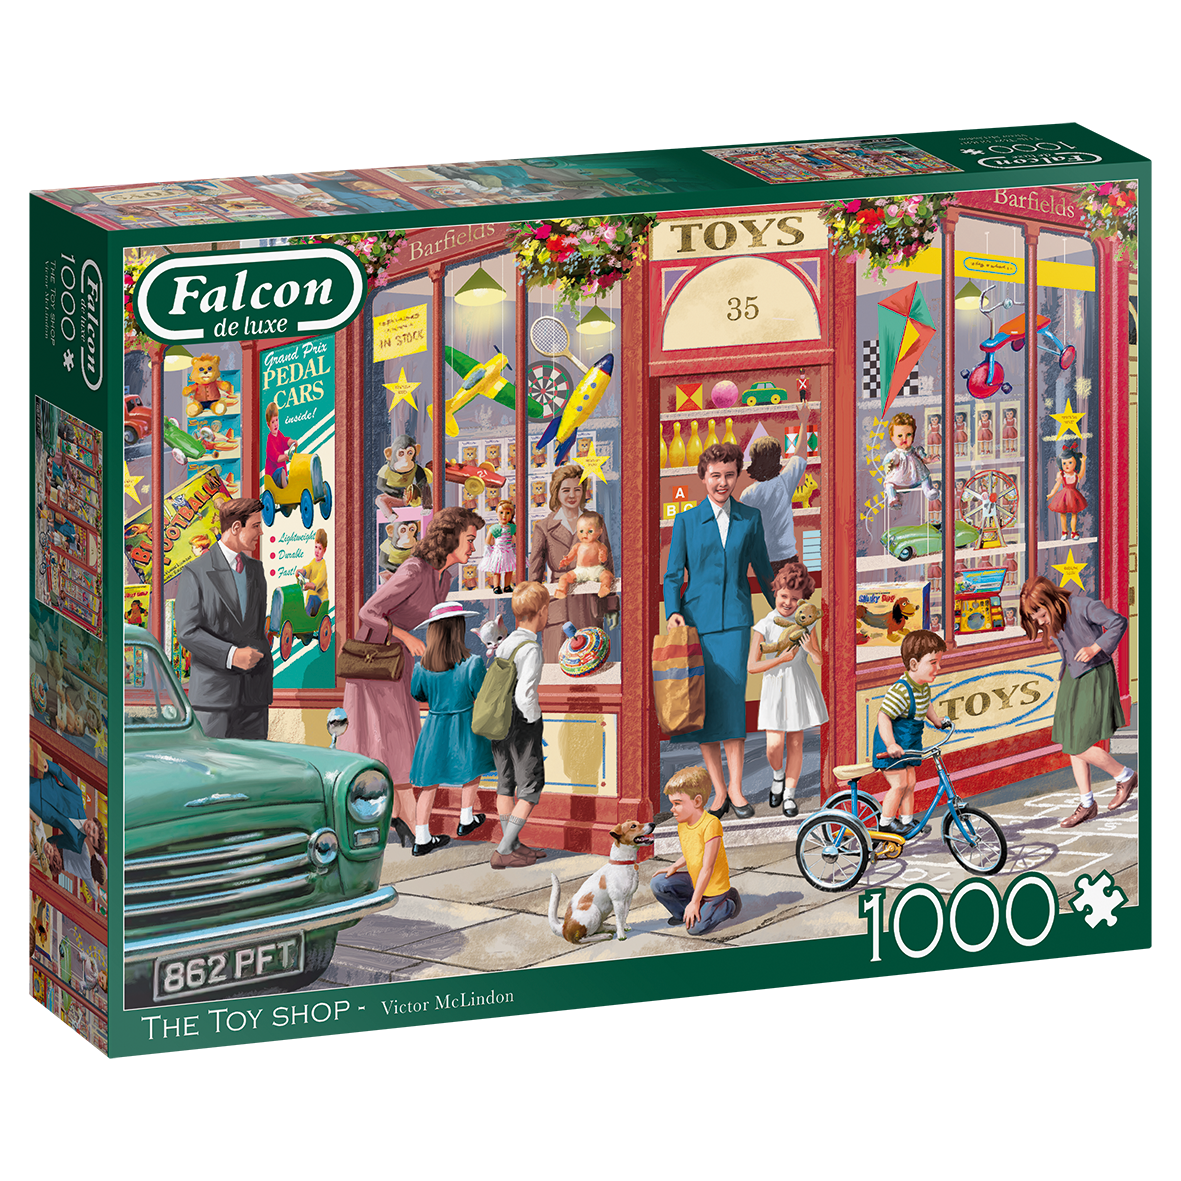 Falcon Falcon 1000 - The Toy Shop